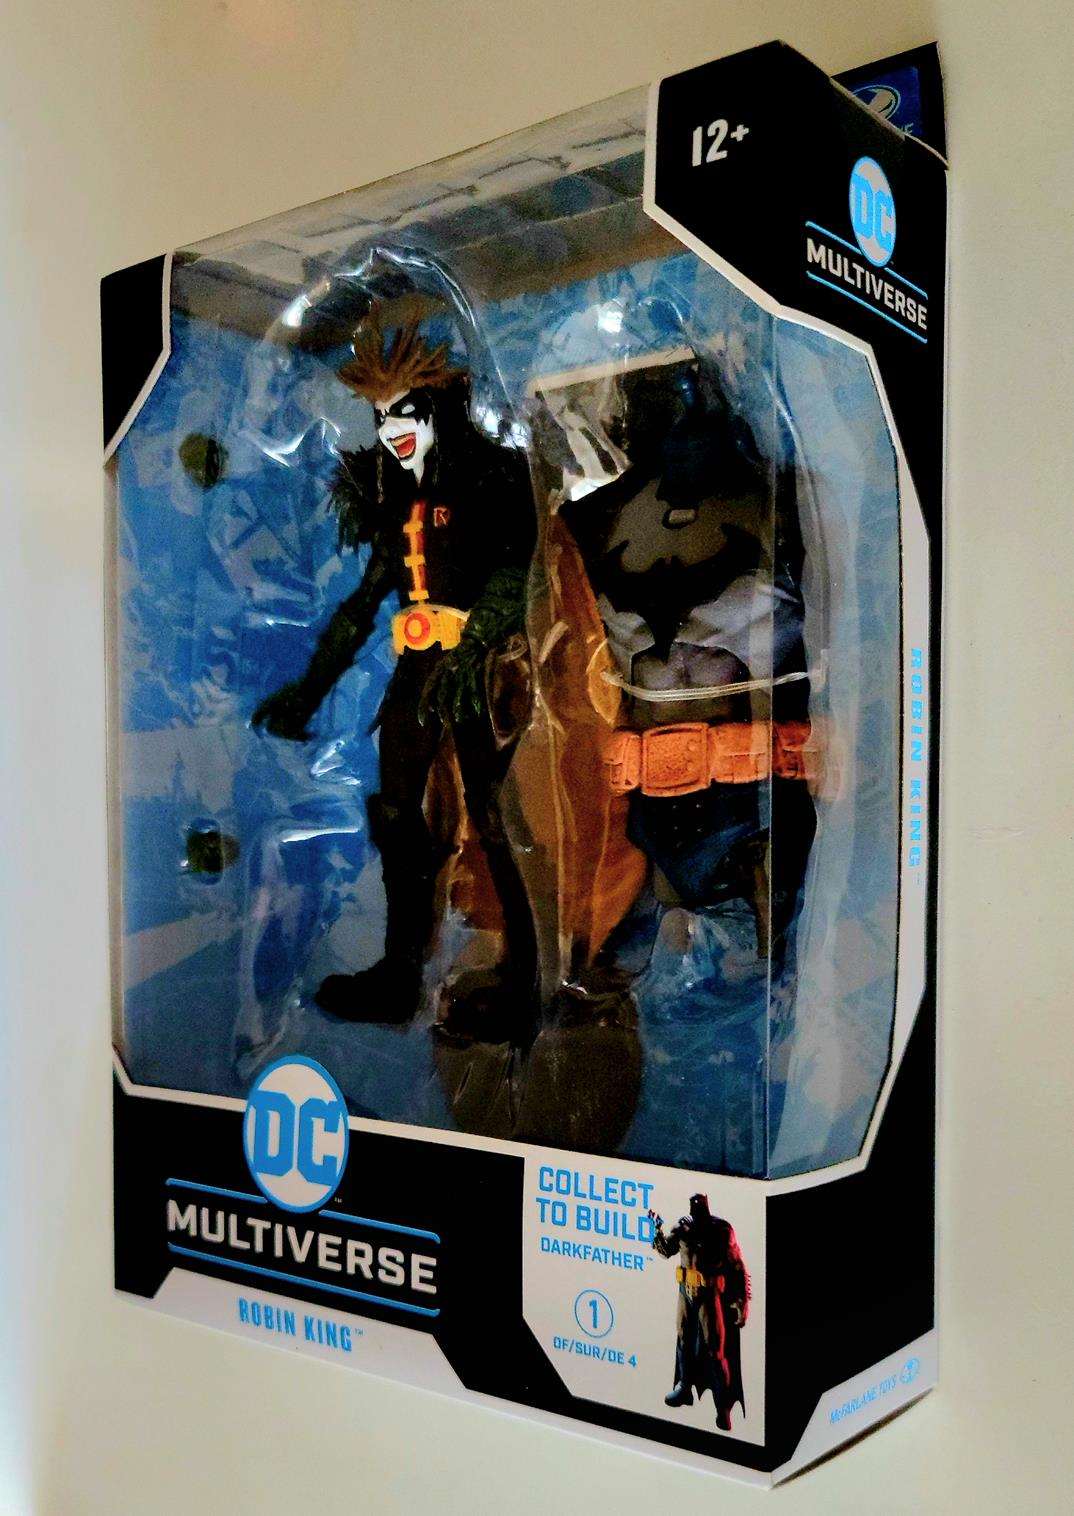 DC Multiverse Dark Night: Death Metal Robin King Darkfather Build a Figure